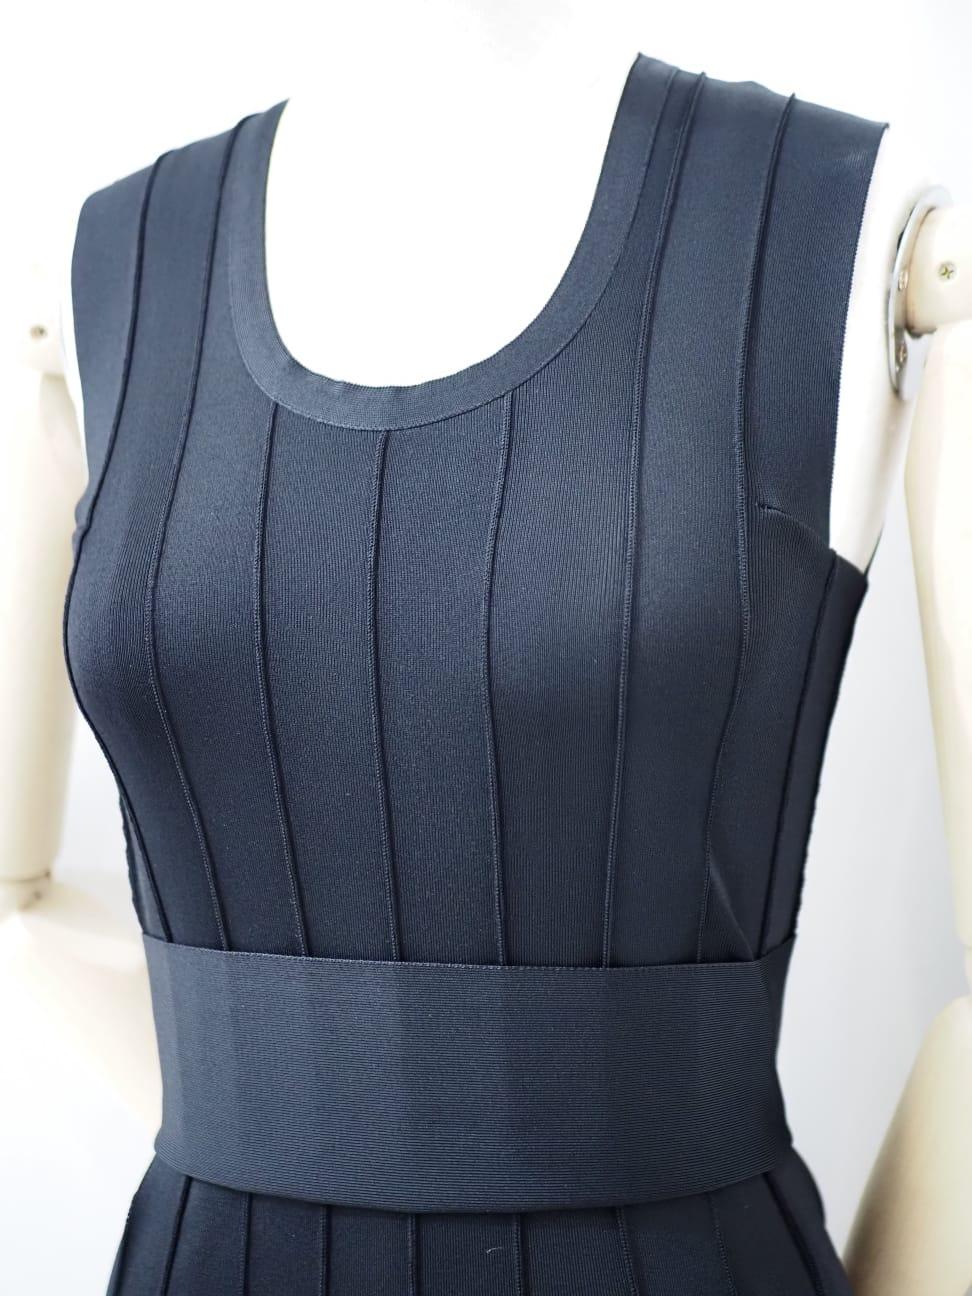 Balmain black dress In Excellent Condition For Sale In Capri, IT